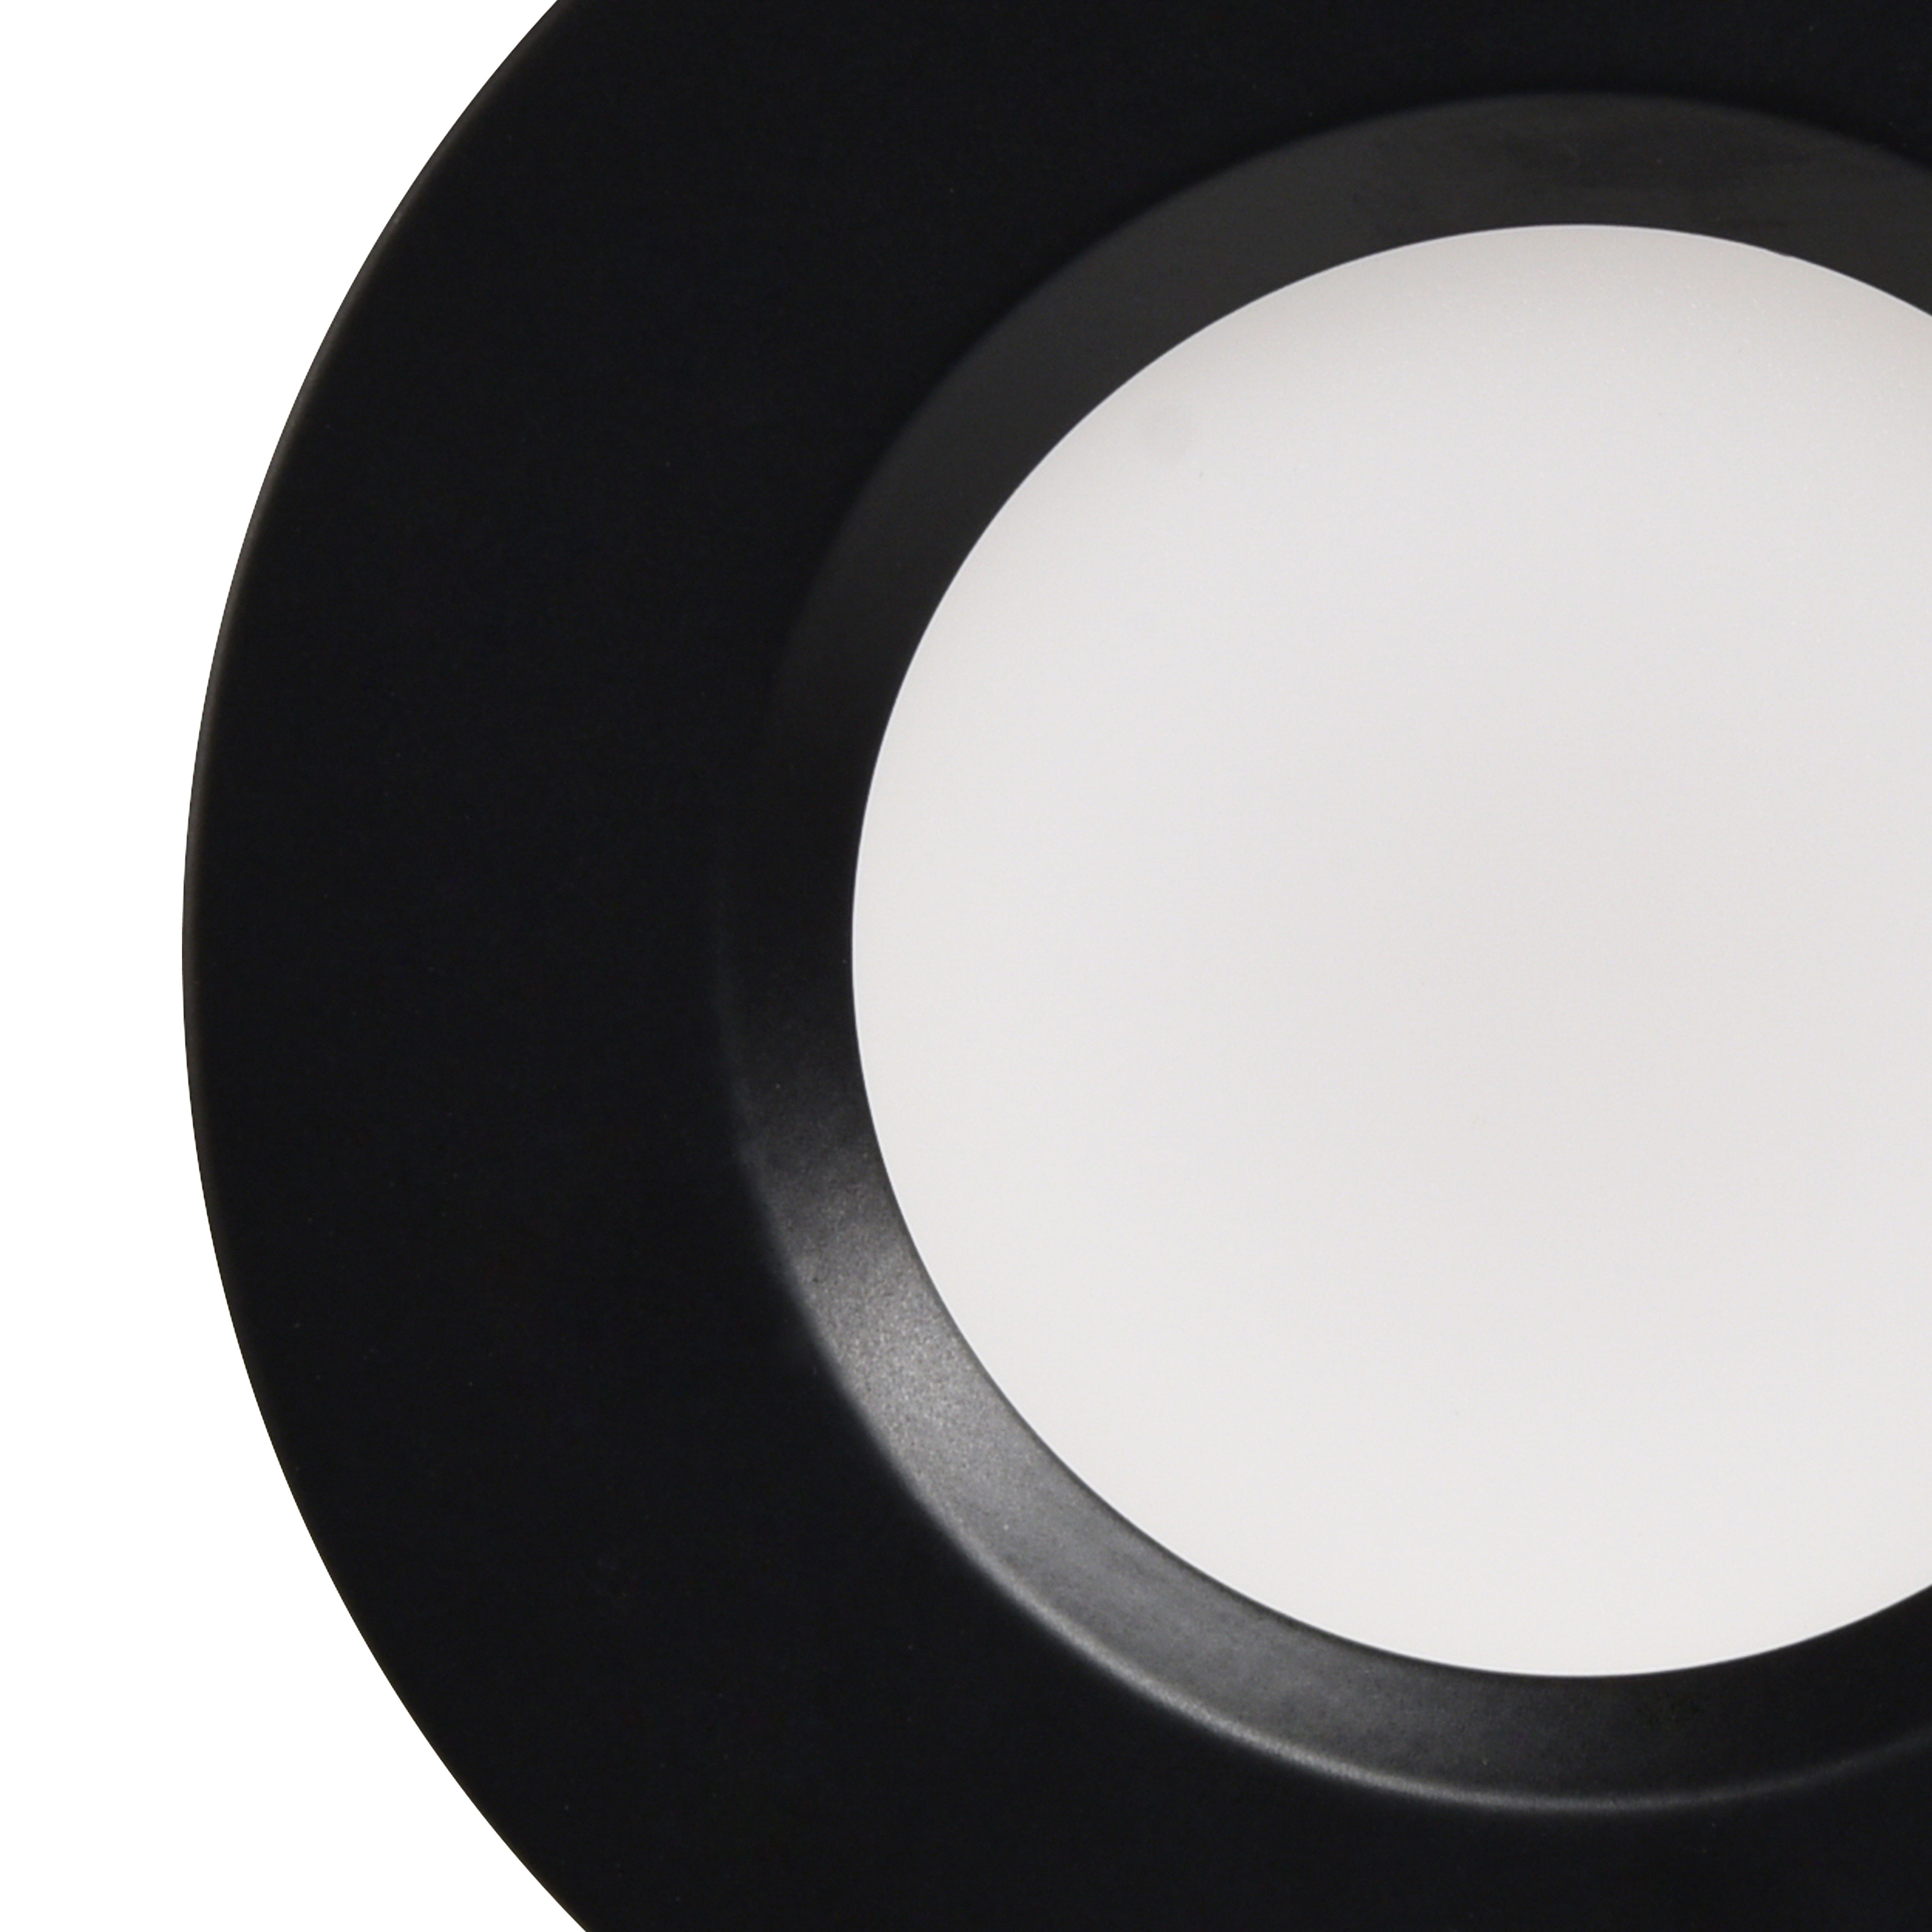 Etana Black Non-adjustable LED Neutral white Downlight 4.7W IP65